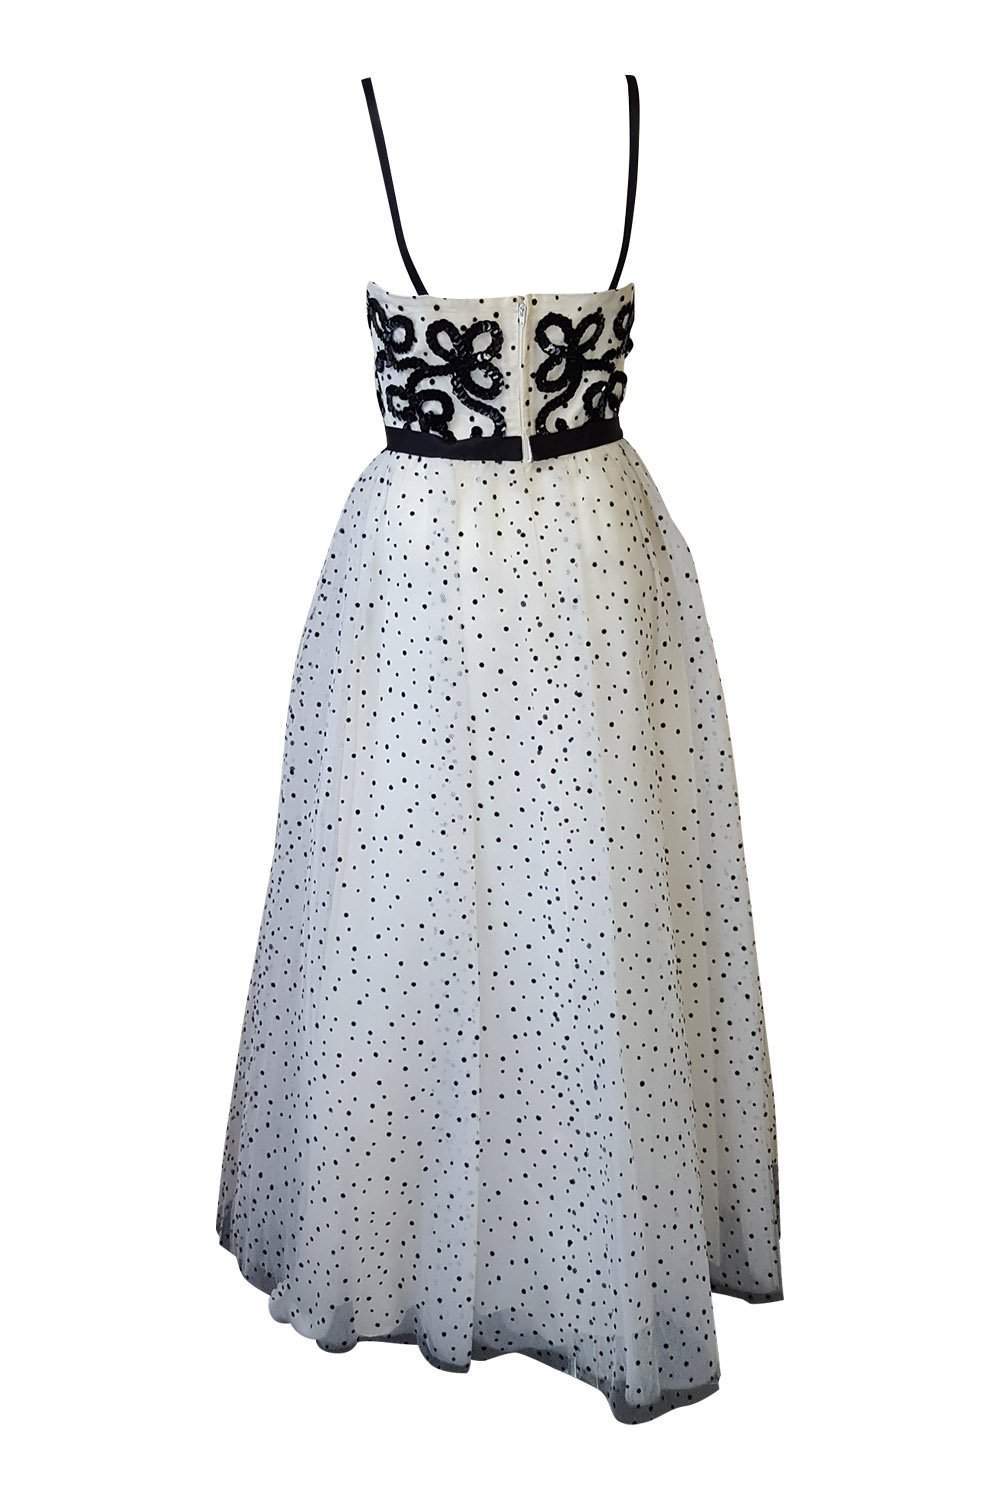 JEAN ALLEN Vintage Black and White Polka Dot Prom Dress (UK 10)-Jean Allen-The Freperie